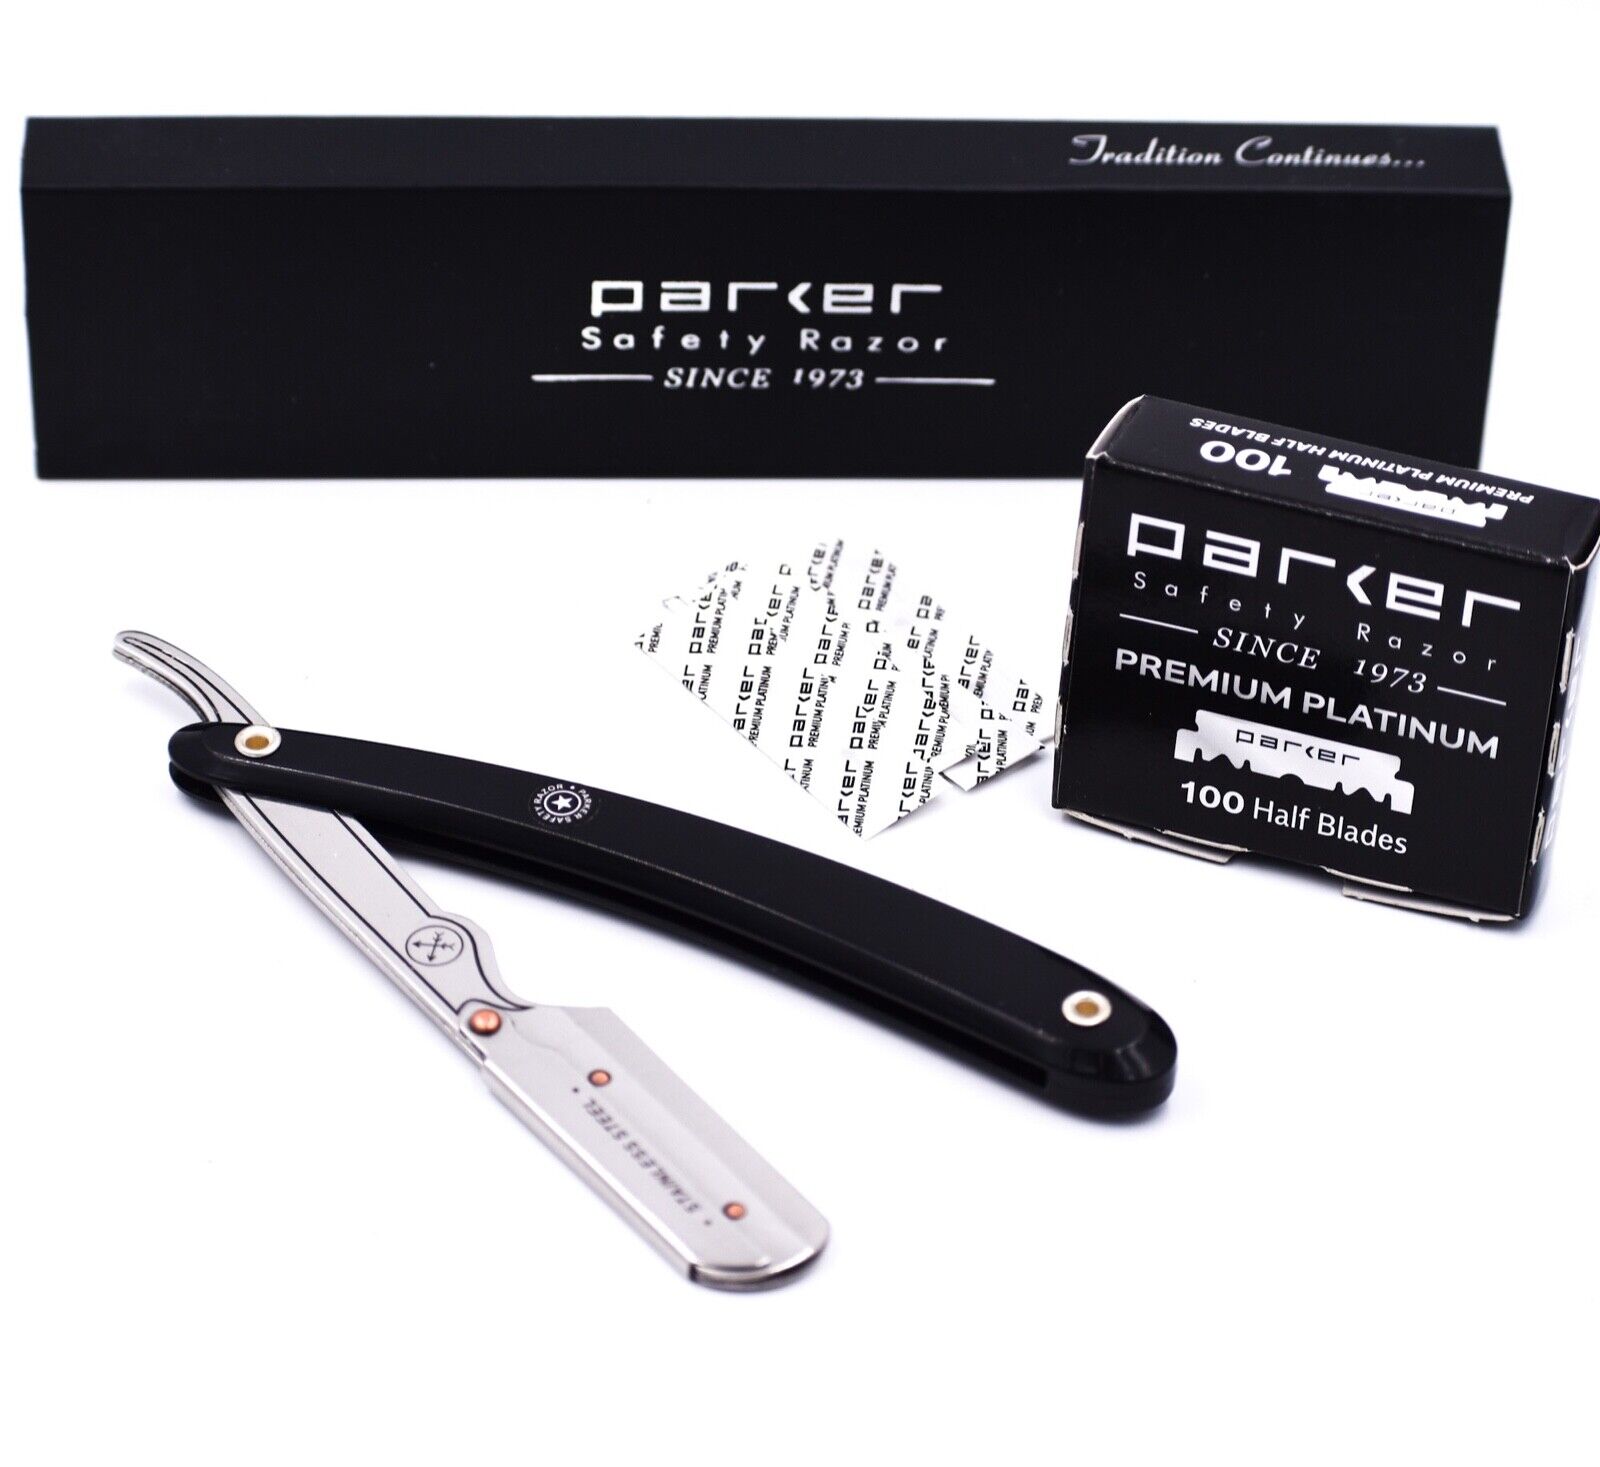 Parker SRB Straight Edge Barber Razor & 100 Parker Premium Platinum Half Blades